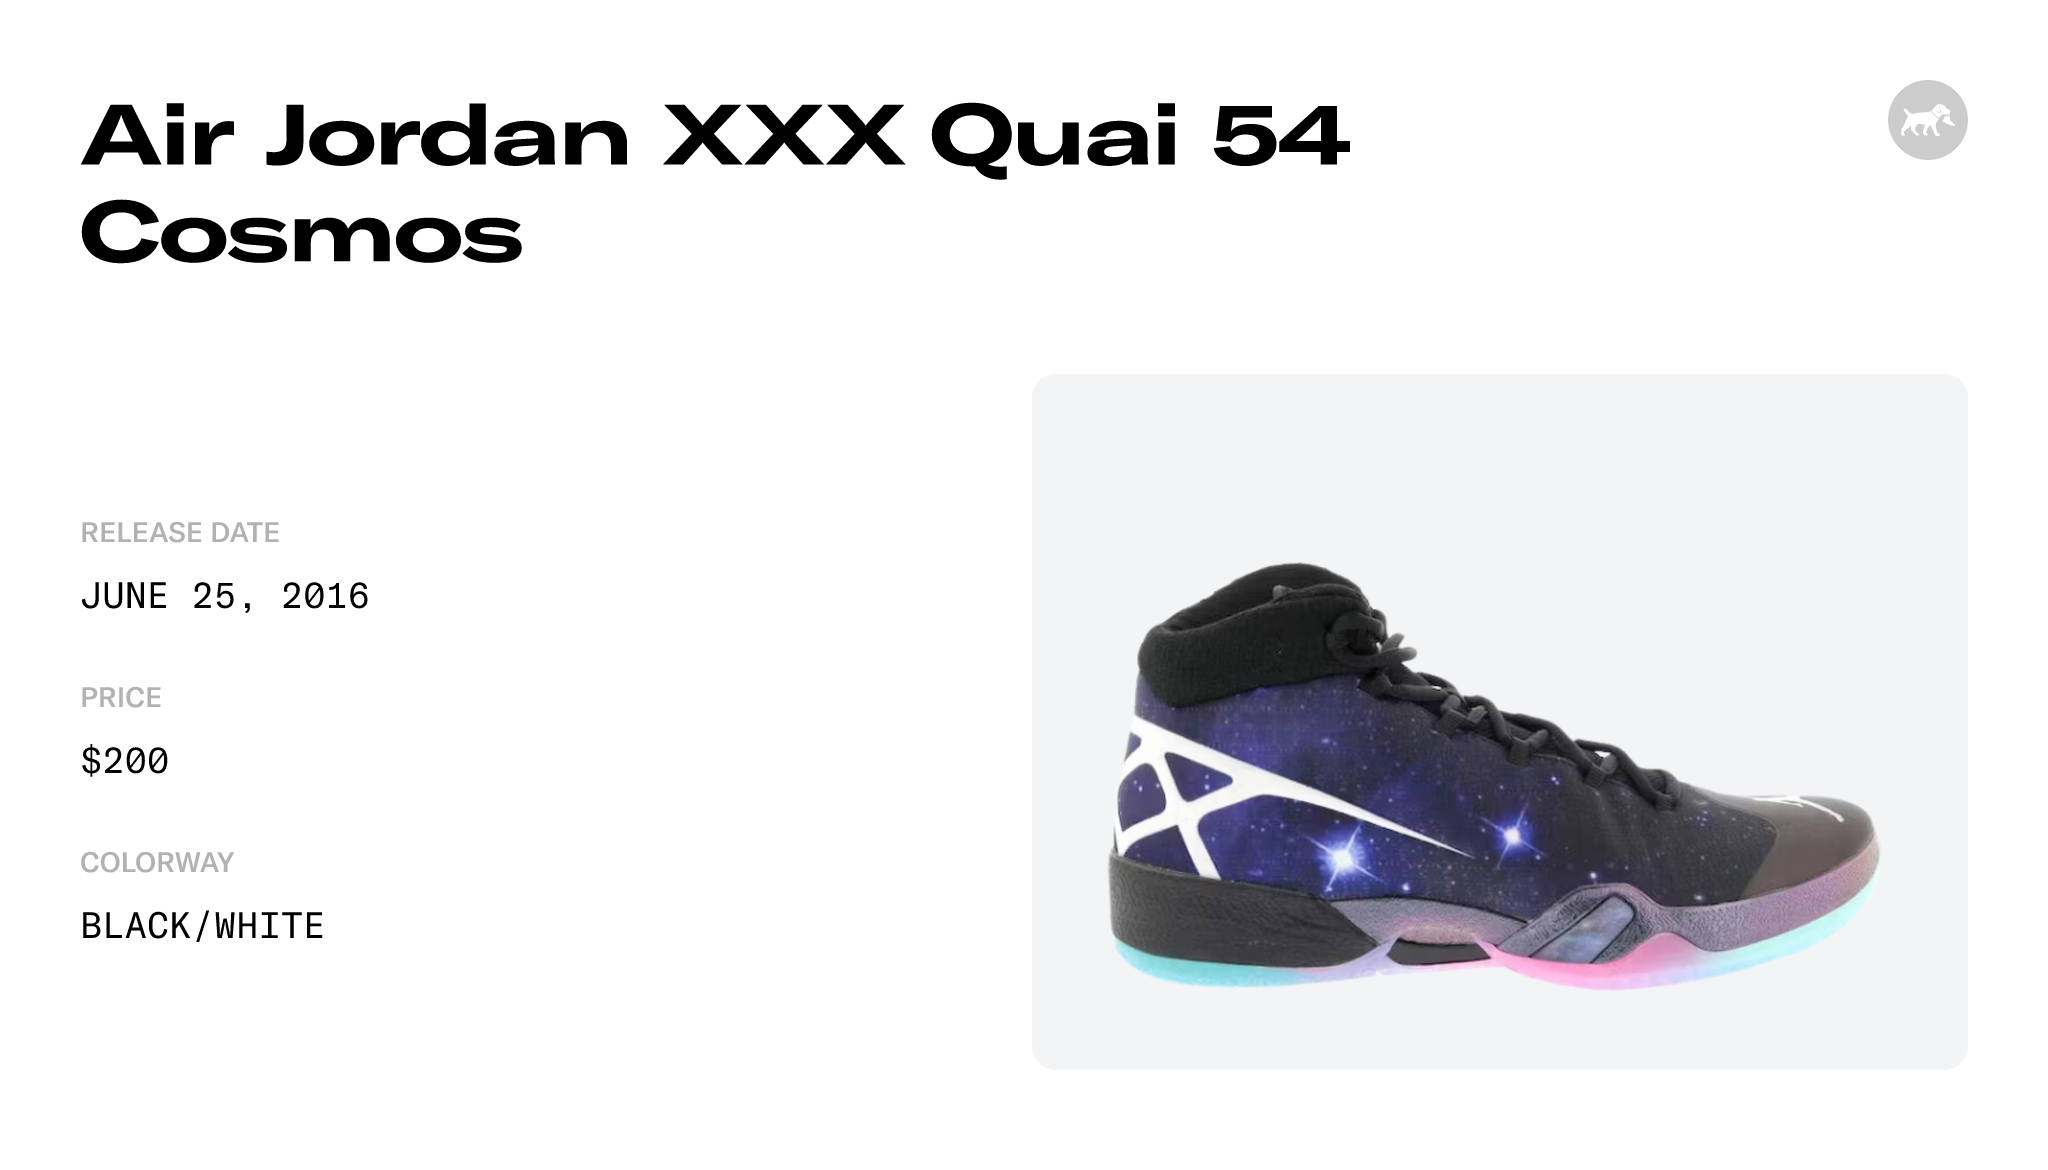 Air Jordan XXX Quai 54 Cosmos - 863586-010 Raffles and Release Date